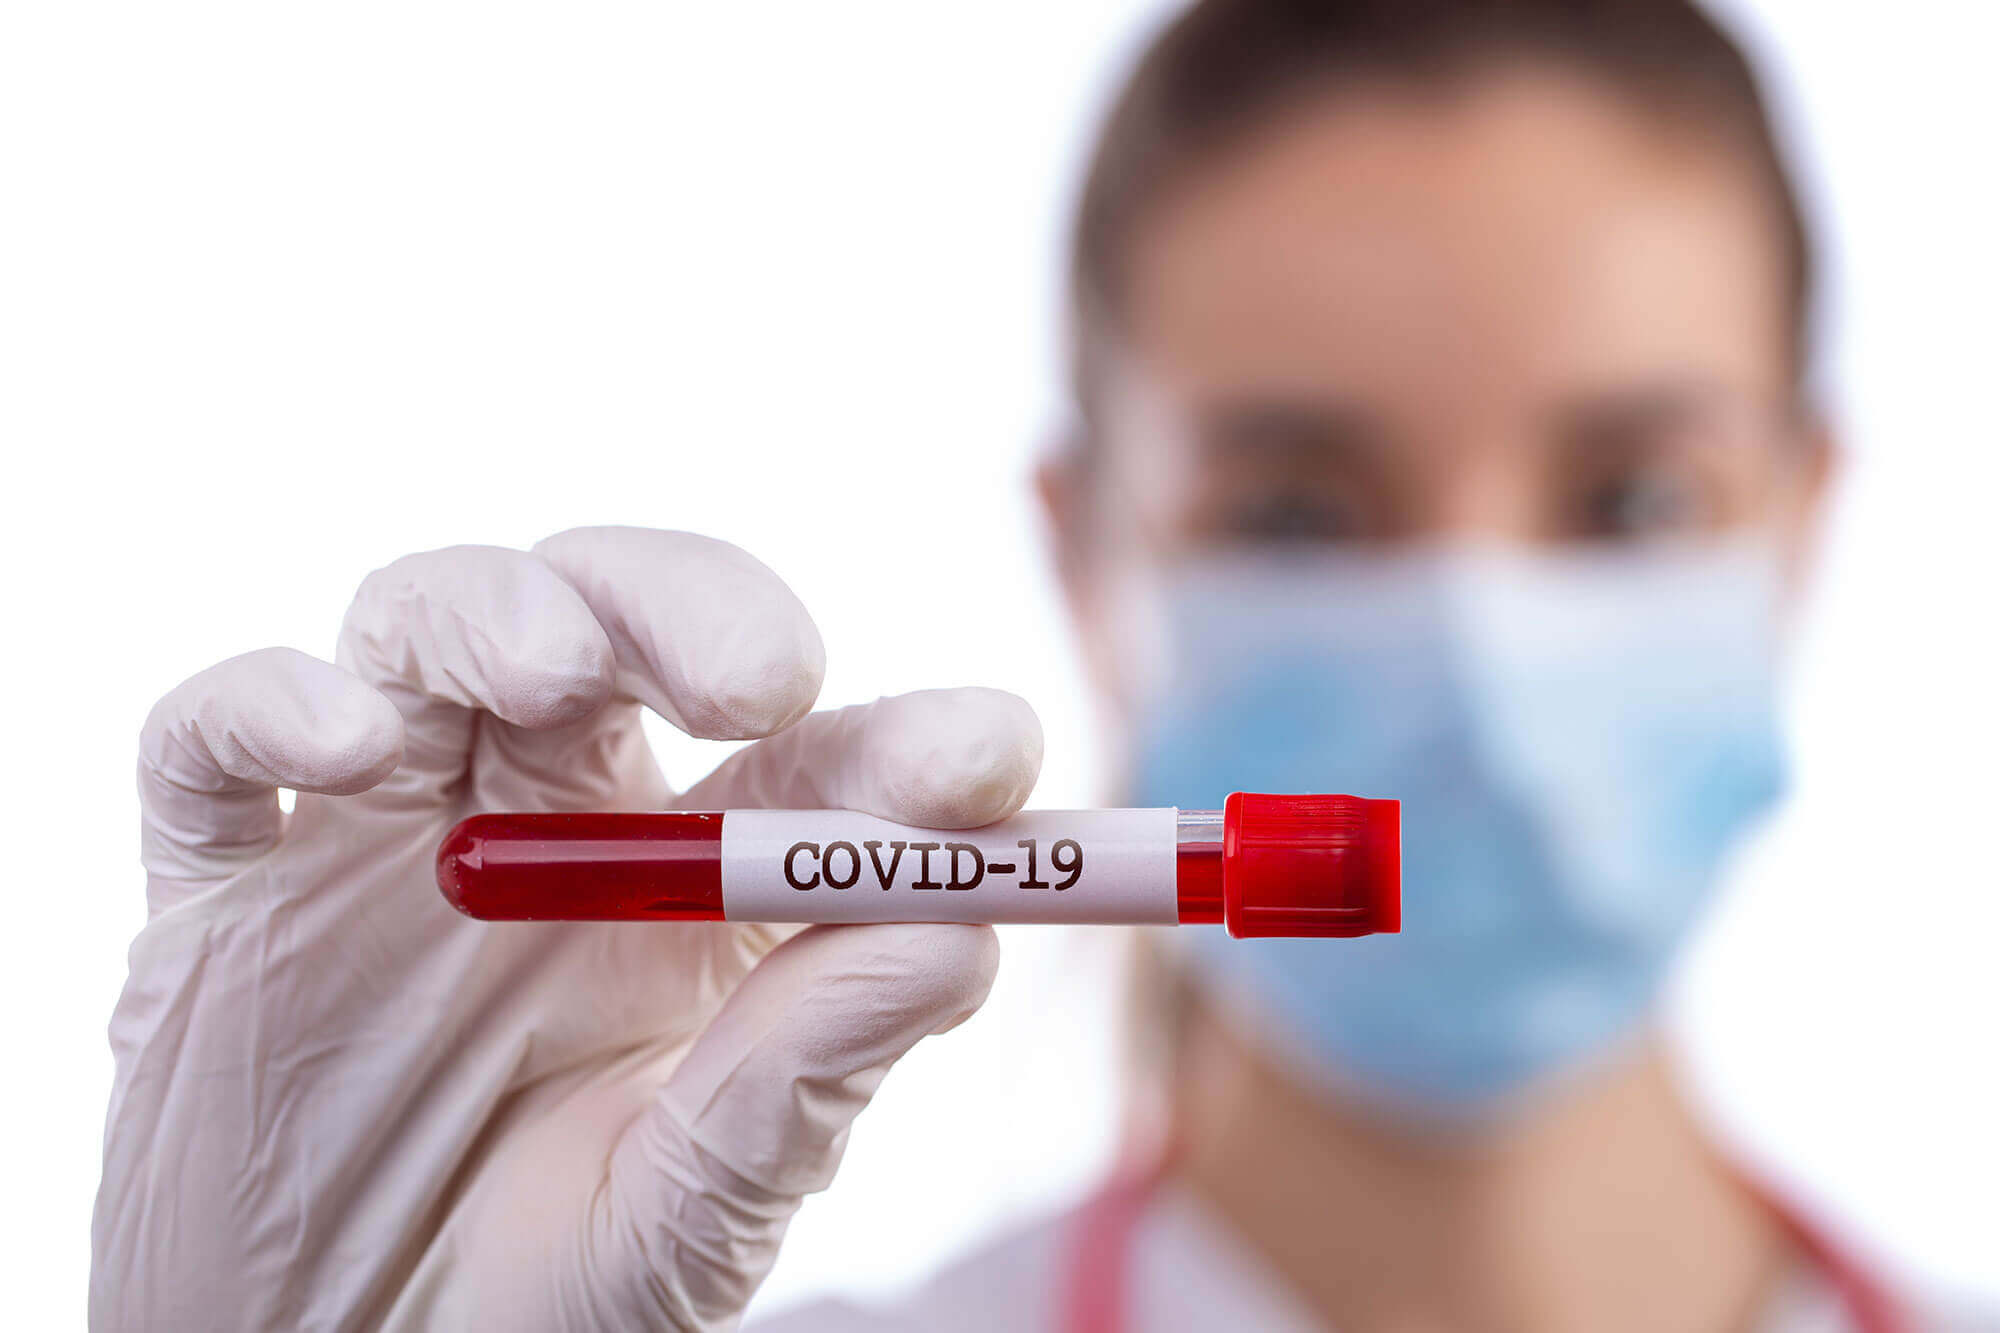 Seguro Saúde e a cobertura para o tratamento do Coronavírus